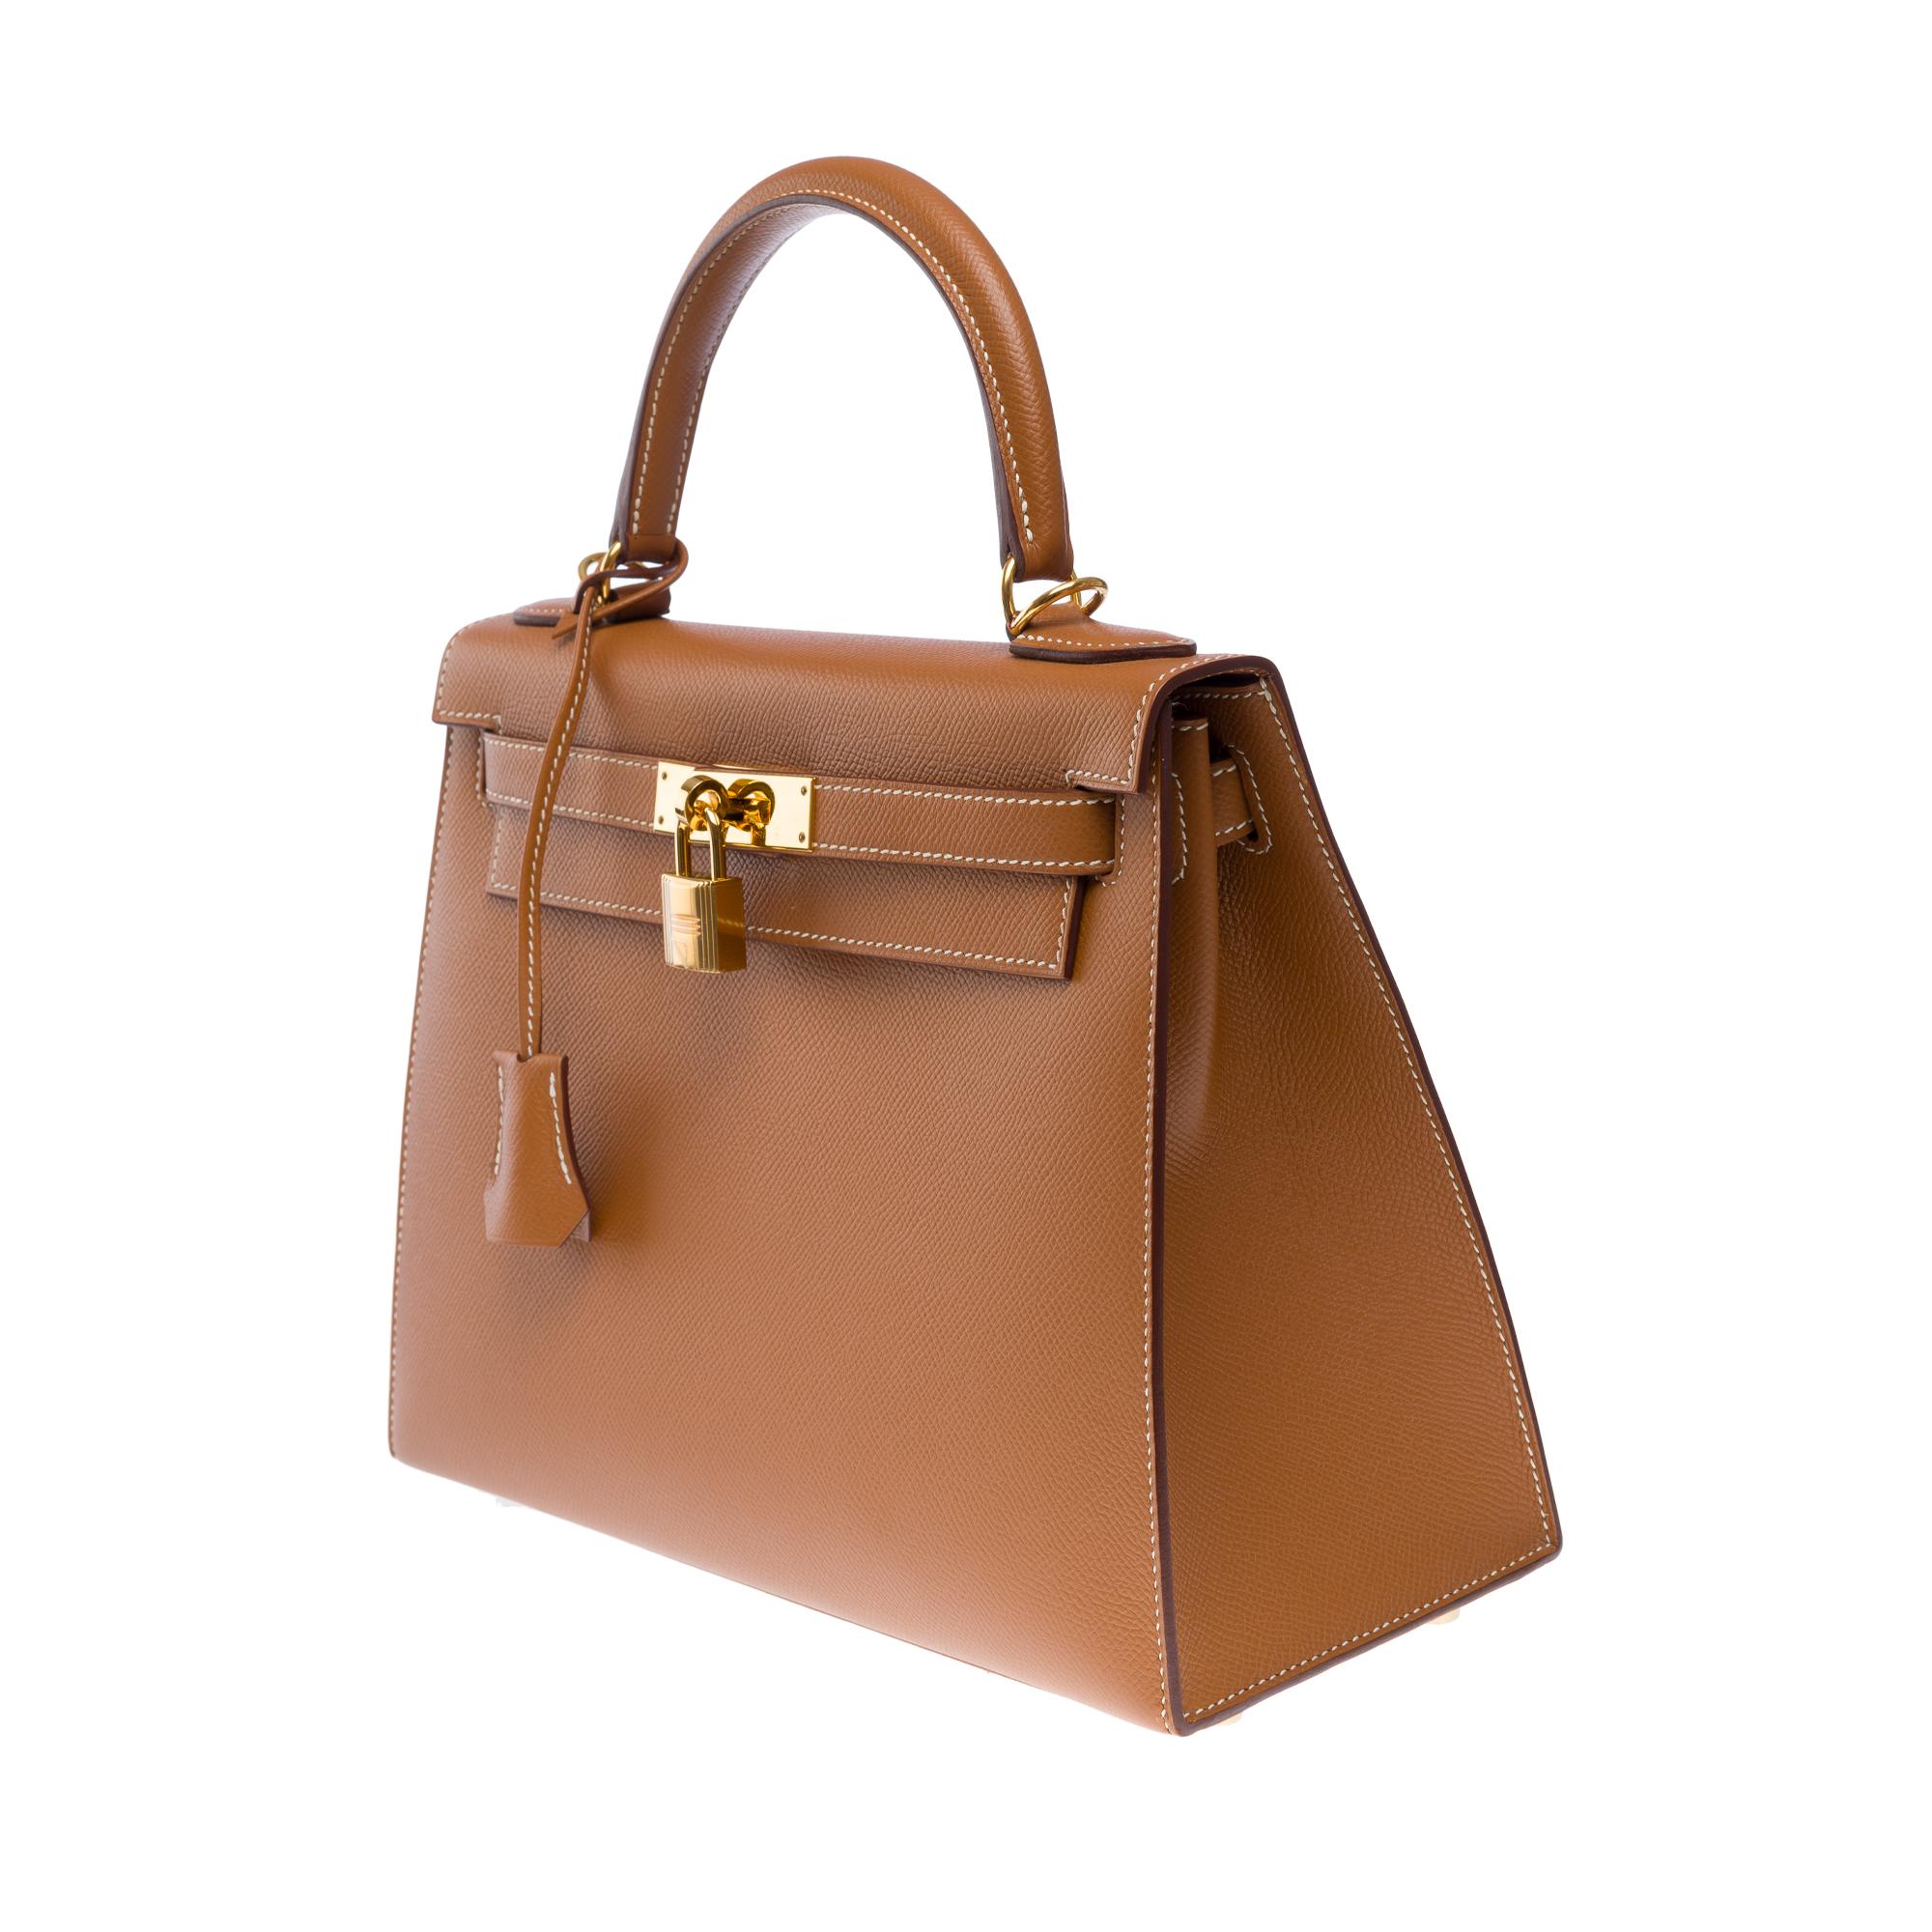 Amazing Hermès Kelly 28 sellier handbag strap in Camel/Gold Epsom leather, GHW 1